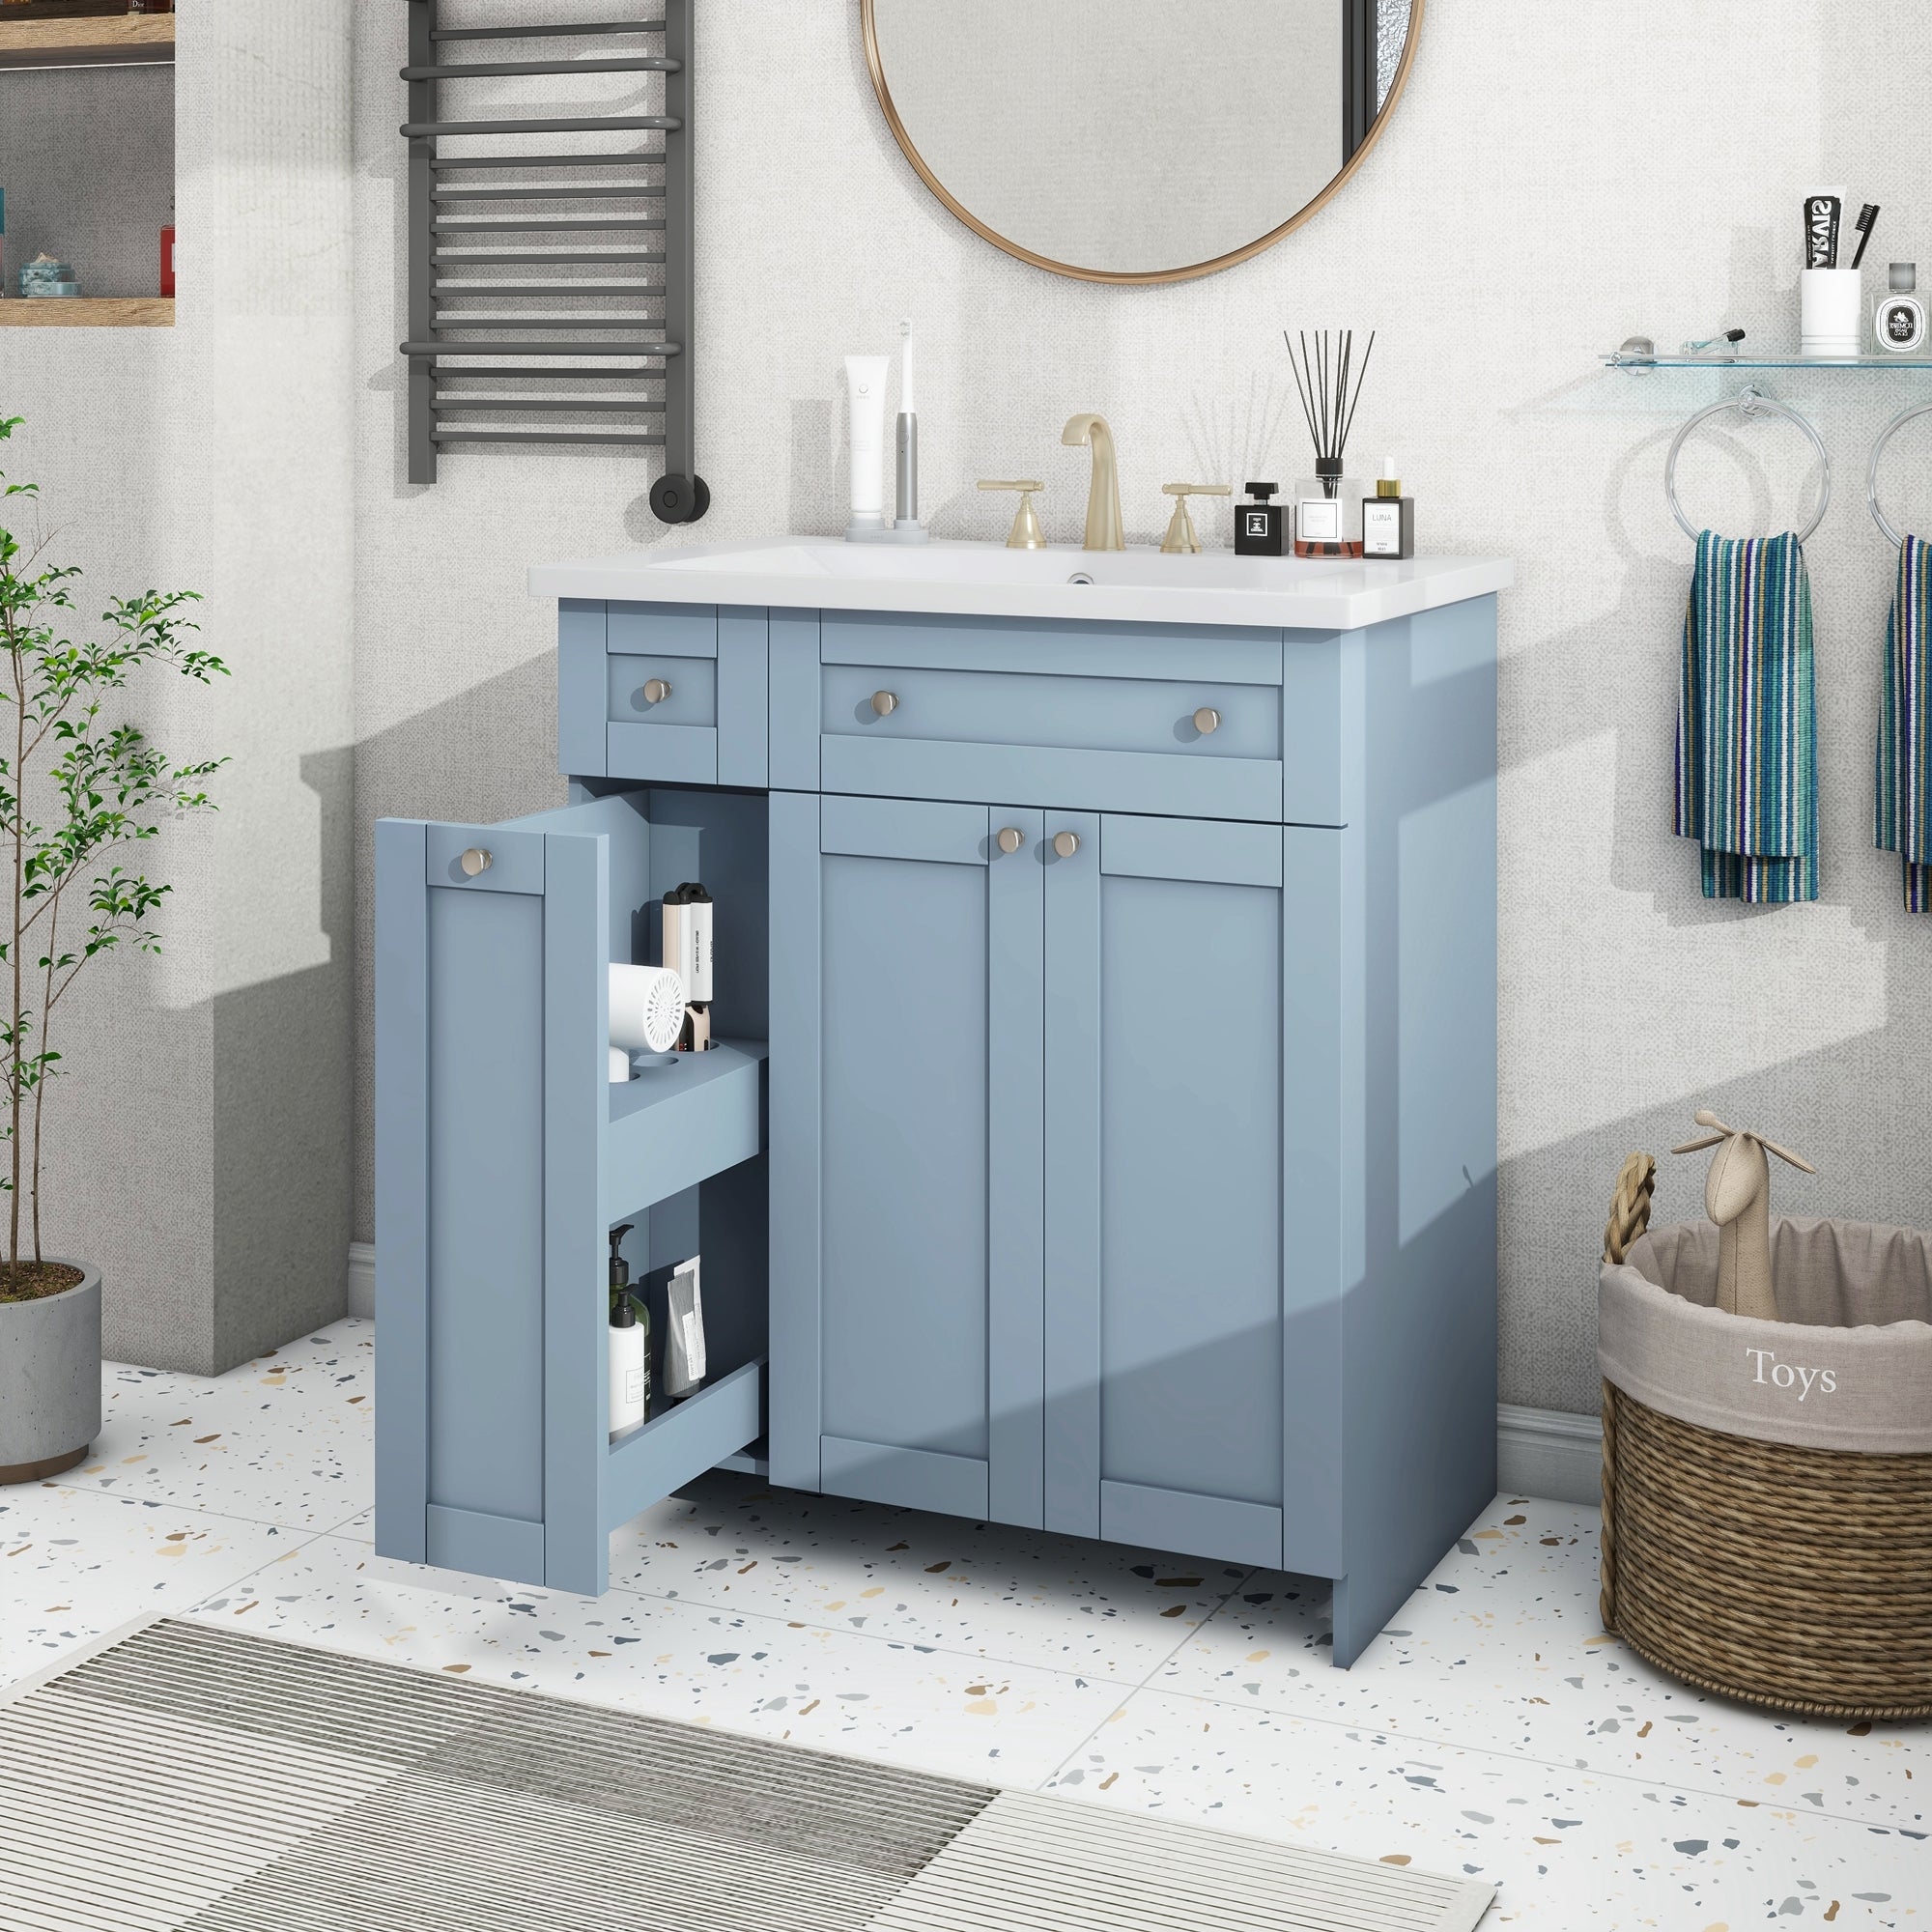 30" Bathroom vanity with Single Sink in grey,Combo